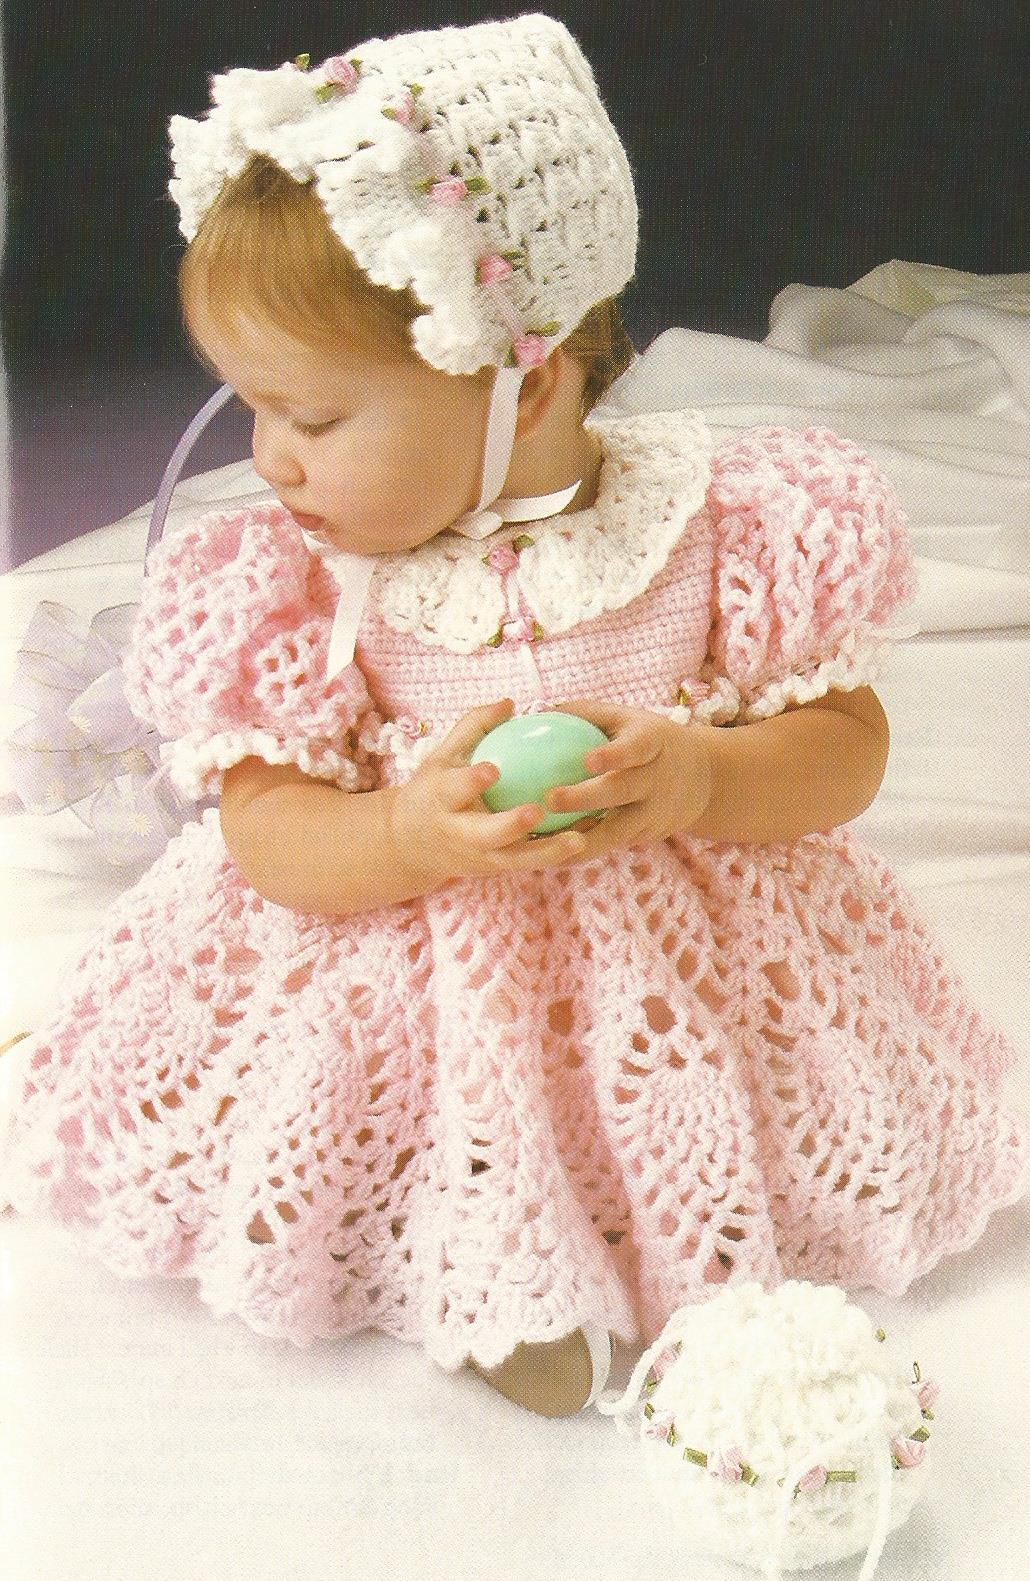 Precious Baby Dress, Bonnet & Purse Crochet Pattern - $11.99